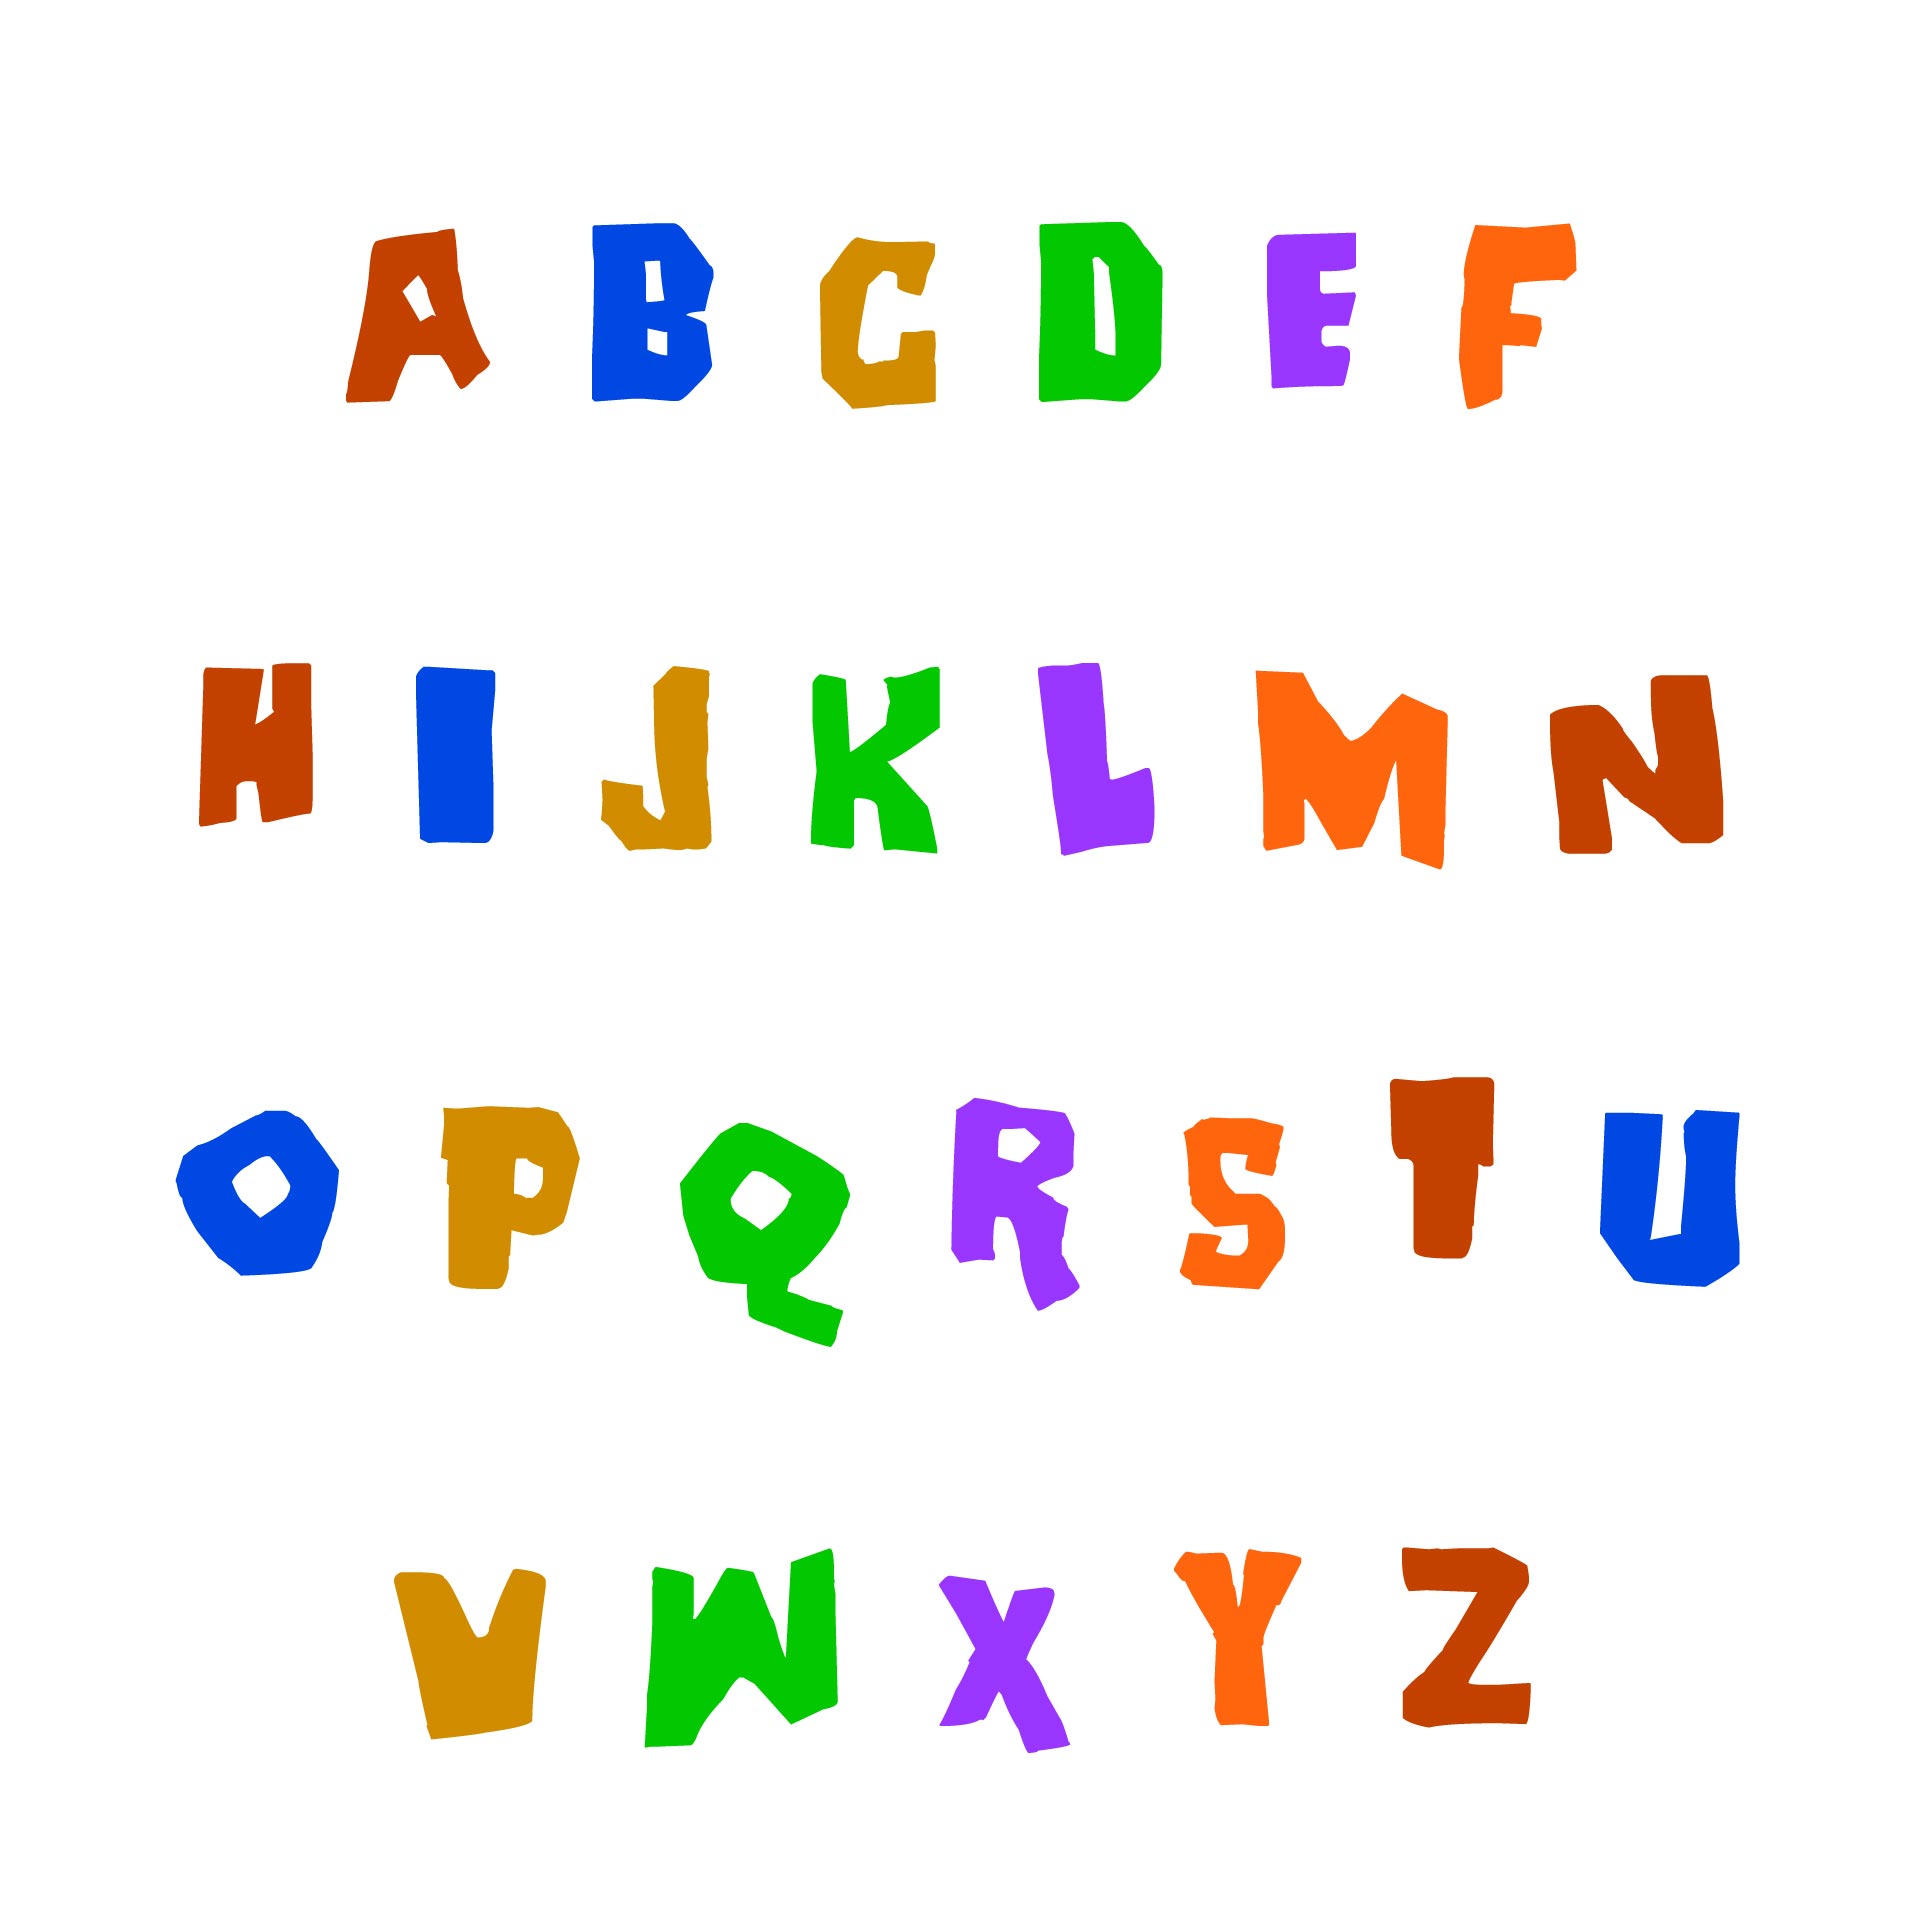 Printable Alphabet Stencil Letters Template